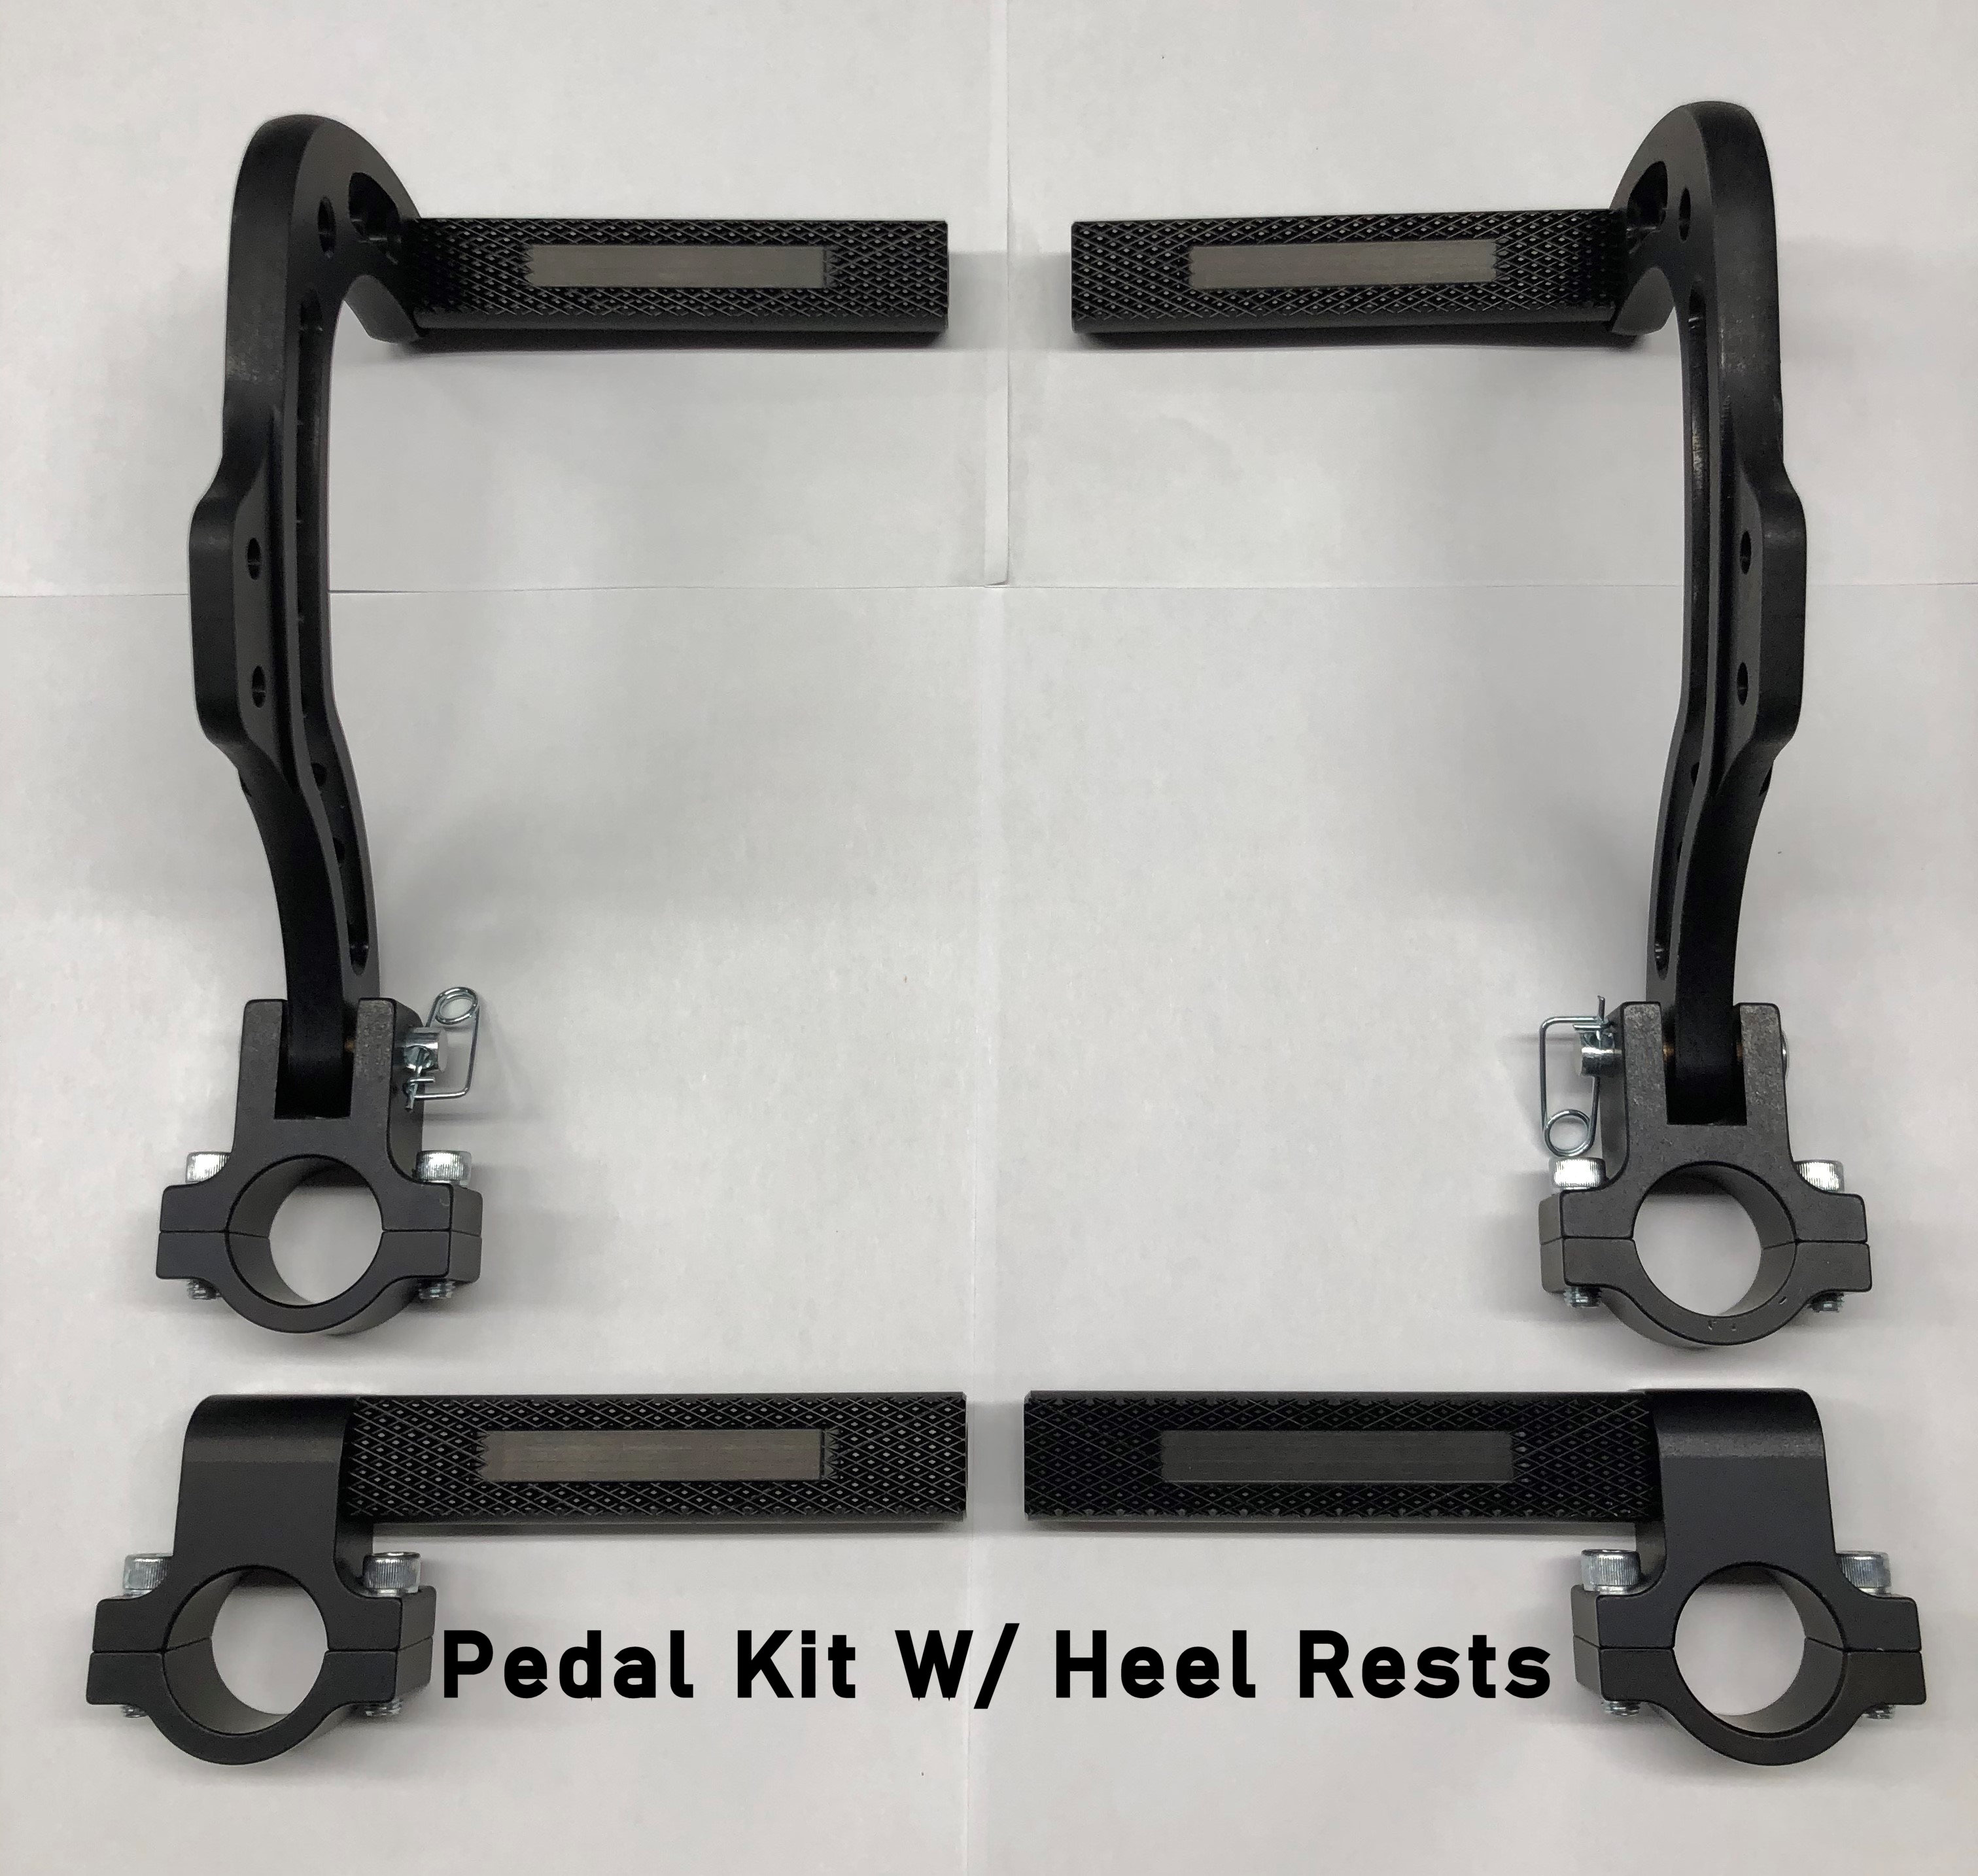 Pedal Kit w/ Heel Rests